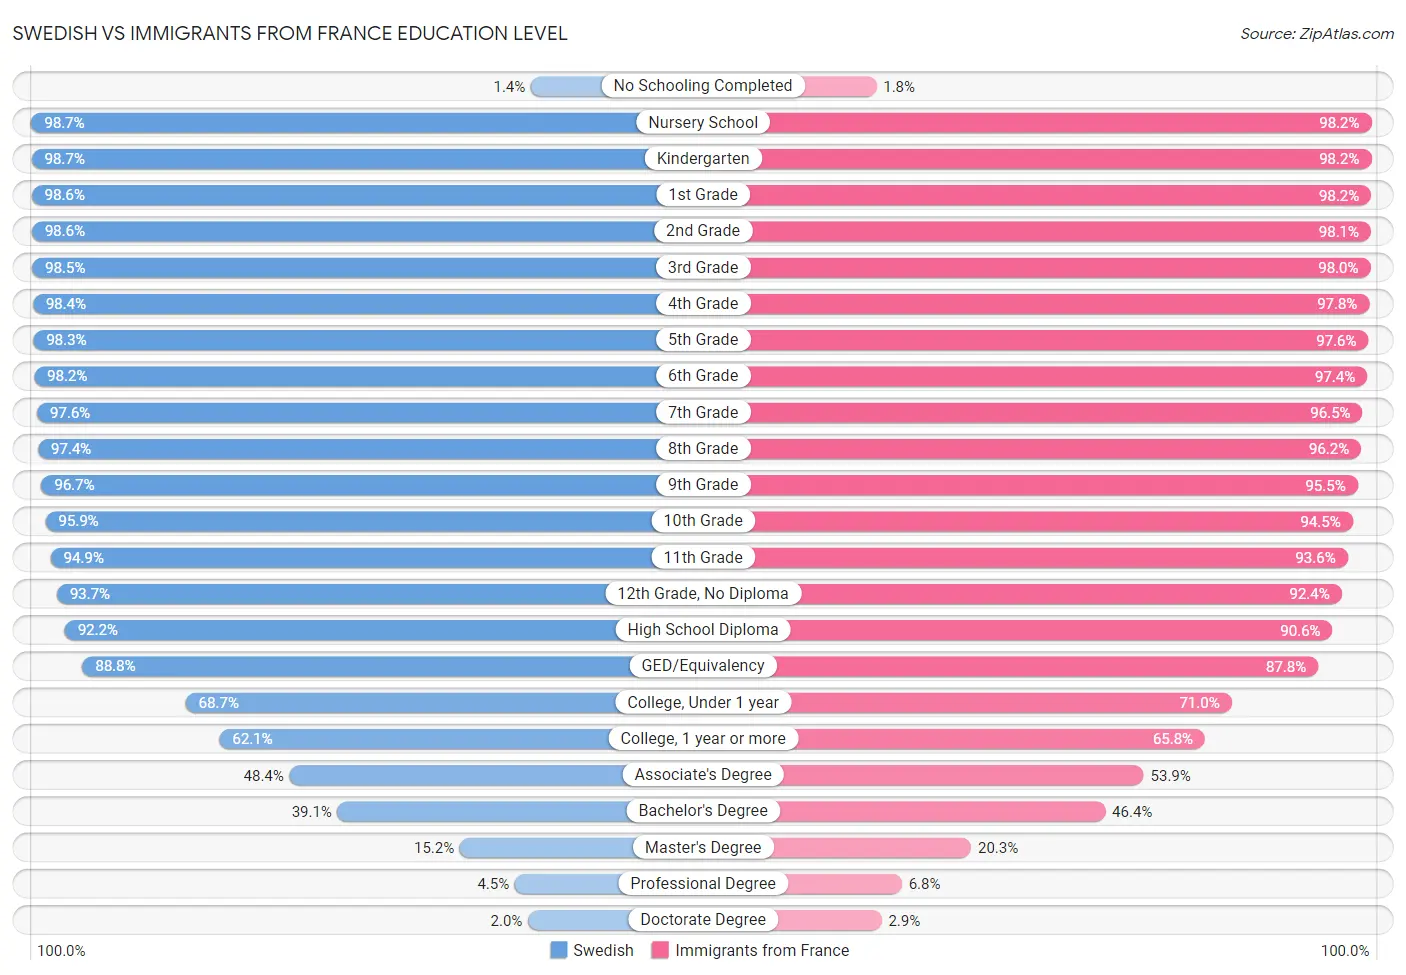 Swedish vs Immigrants from France Education Level